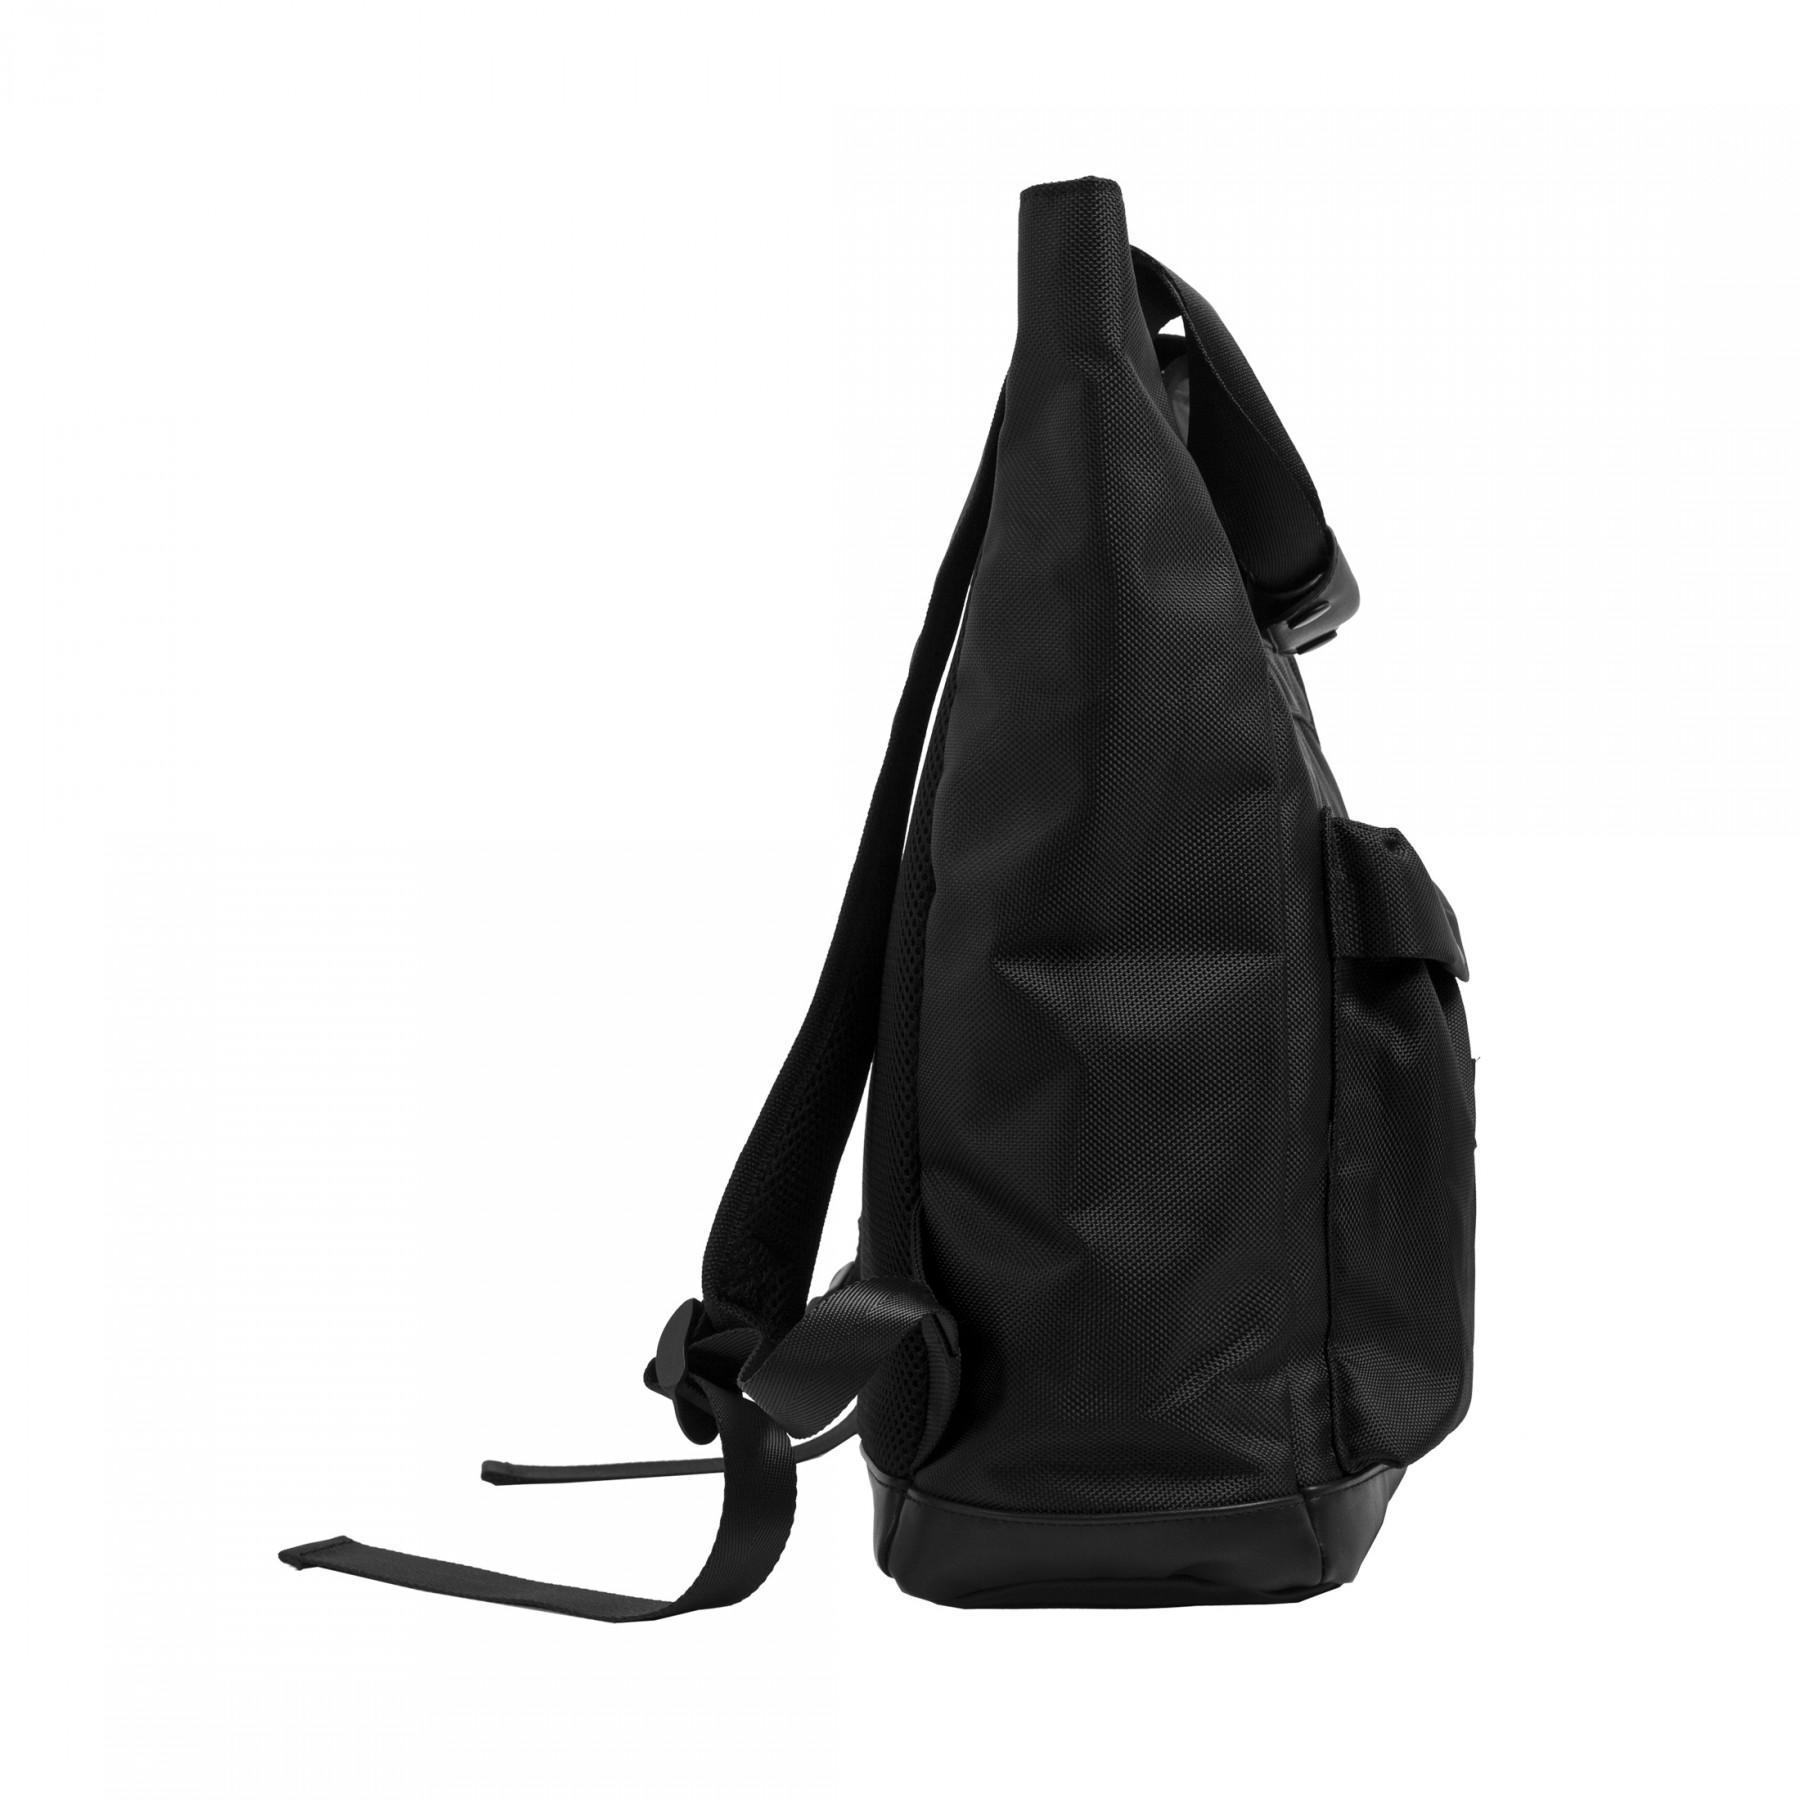 Urban Classic carry handle bapa bag